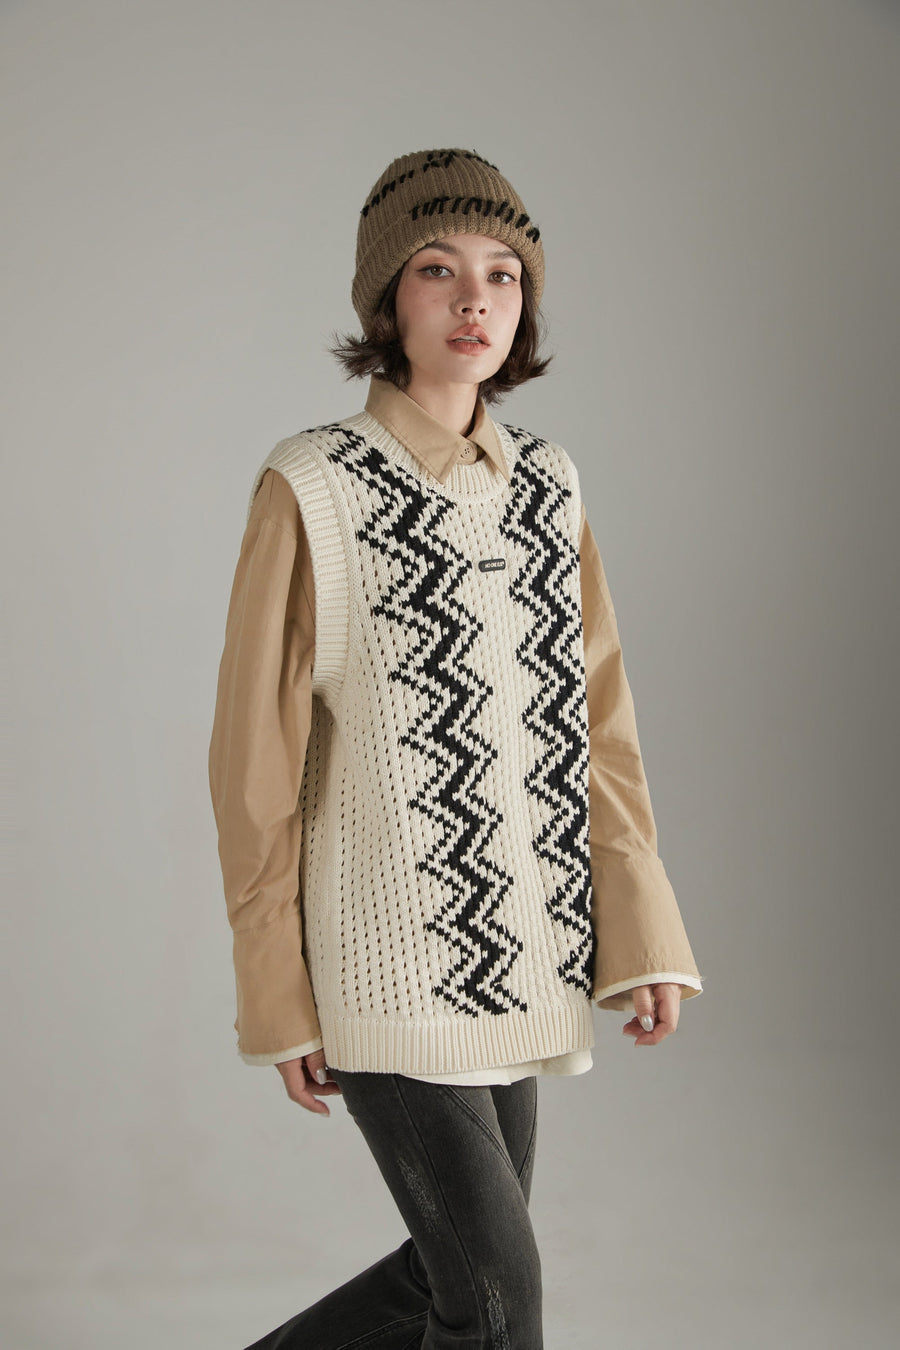 Wavy Sleeveless Knit Sweater